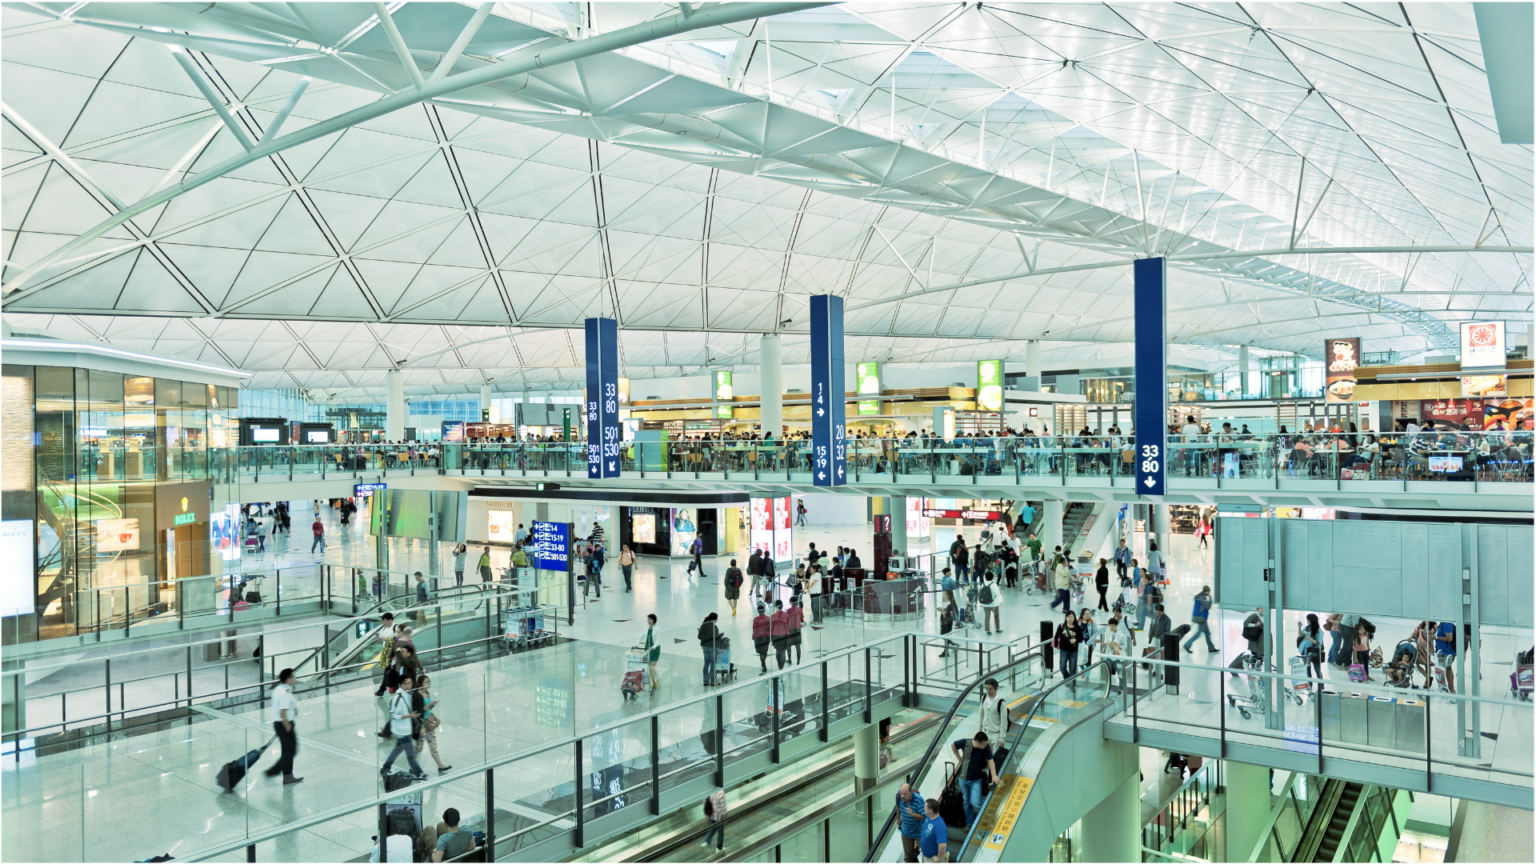 Hong Kong International Airport with passengers